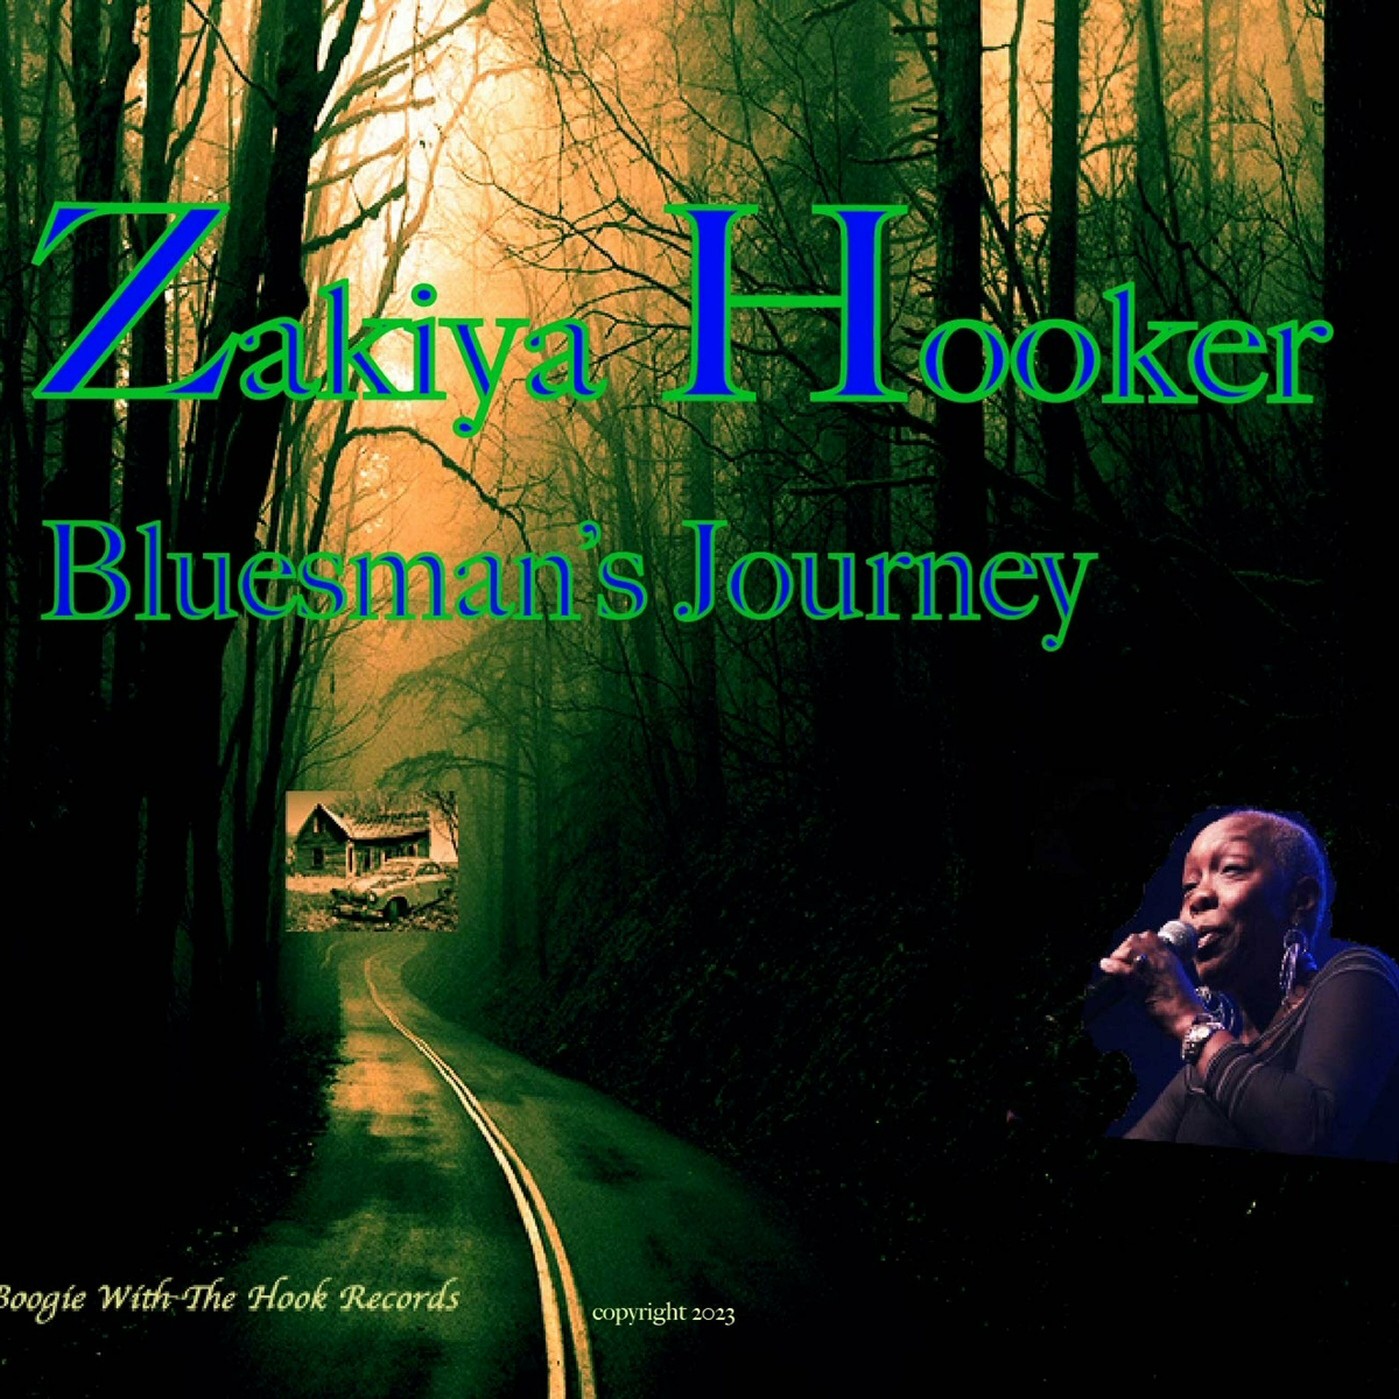 Zakiya Hooker - Bluesman’s Journey